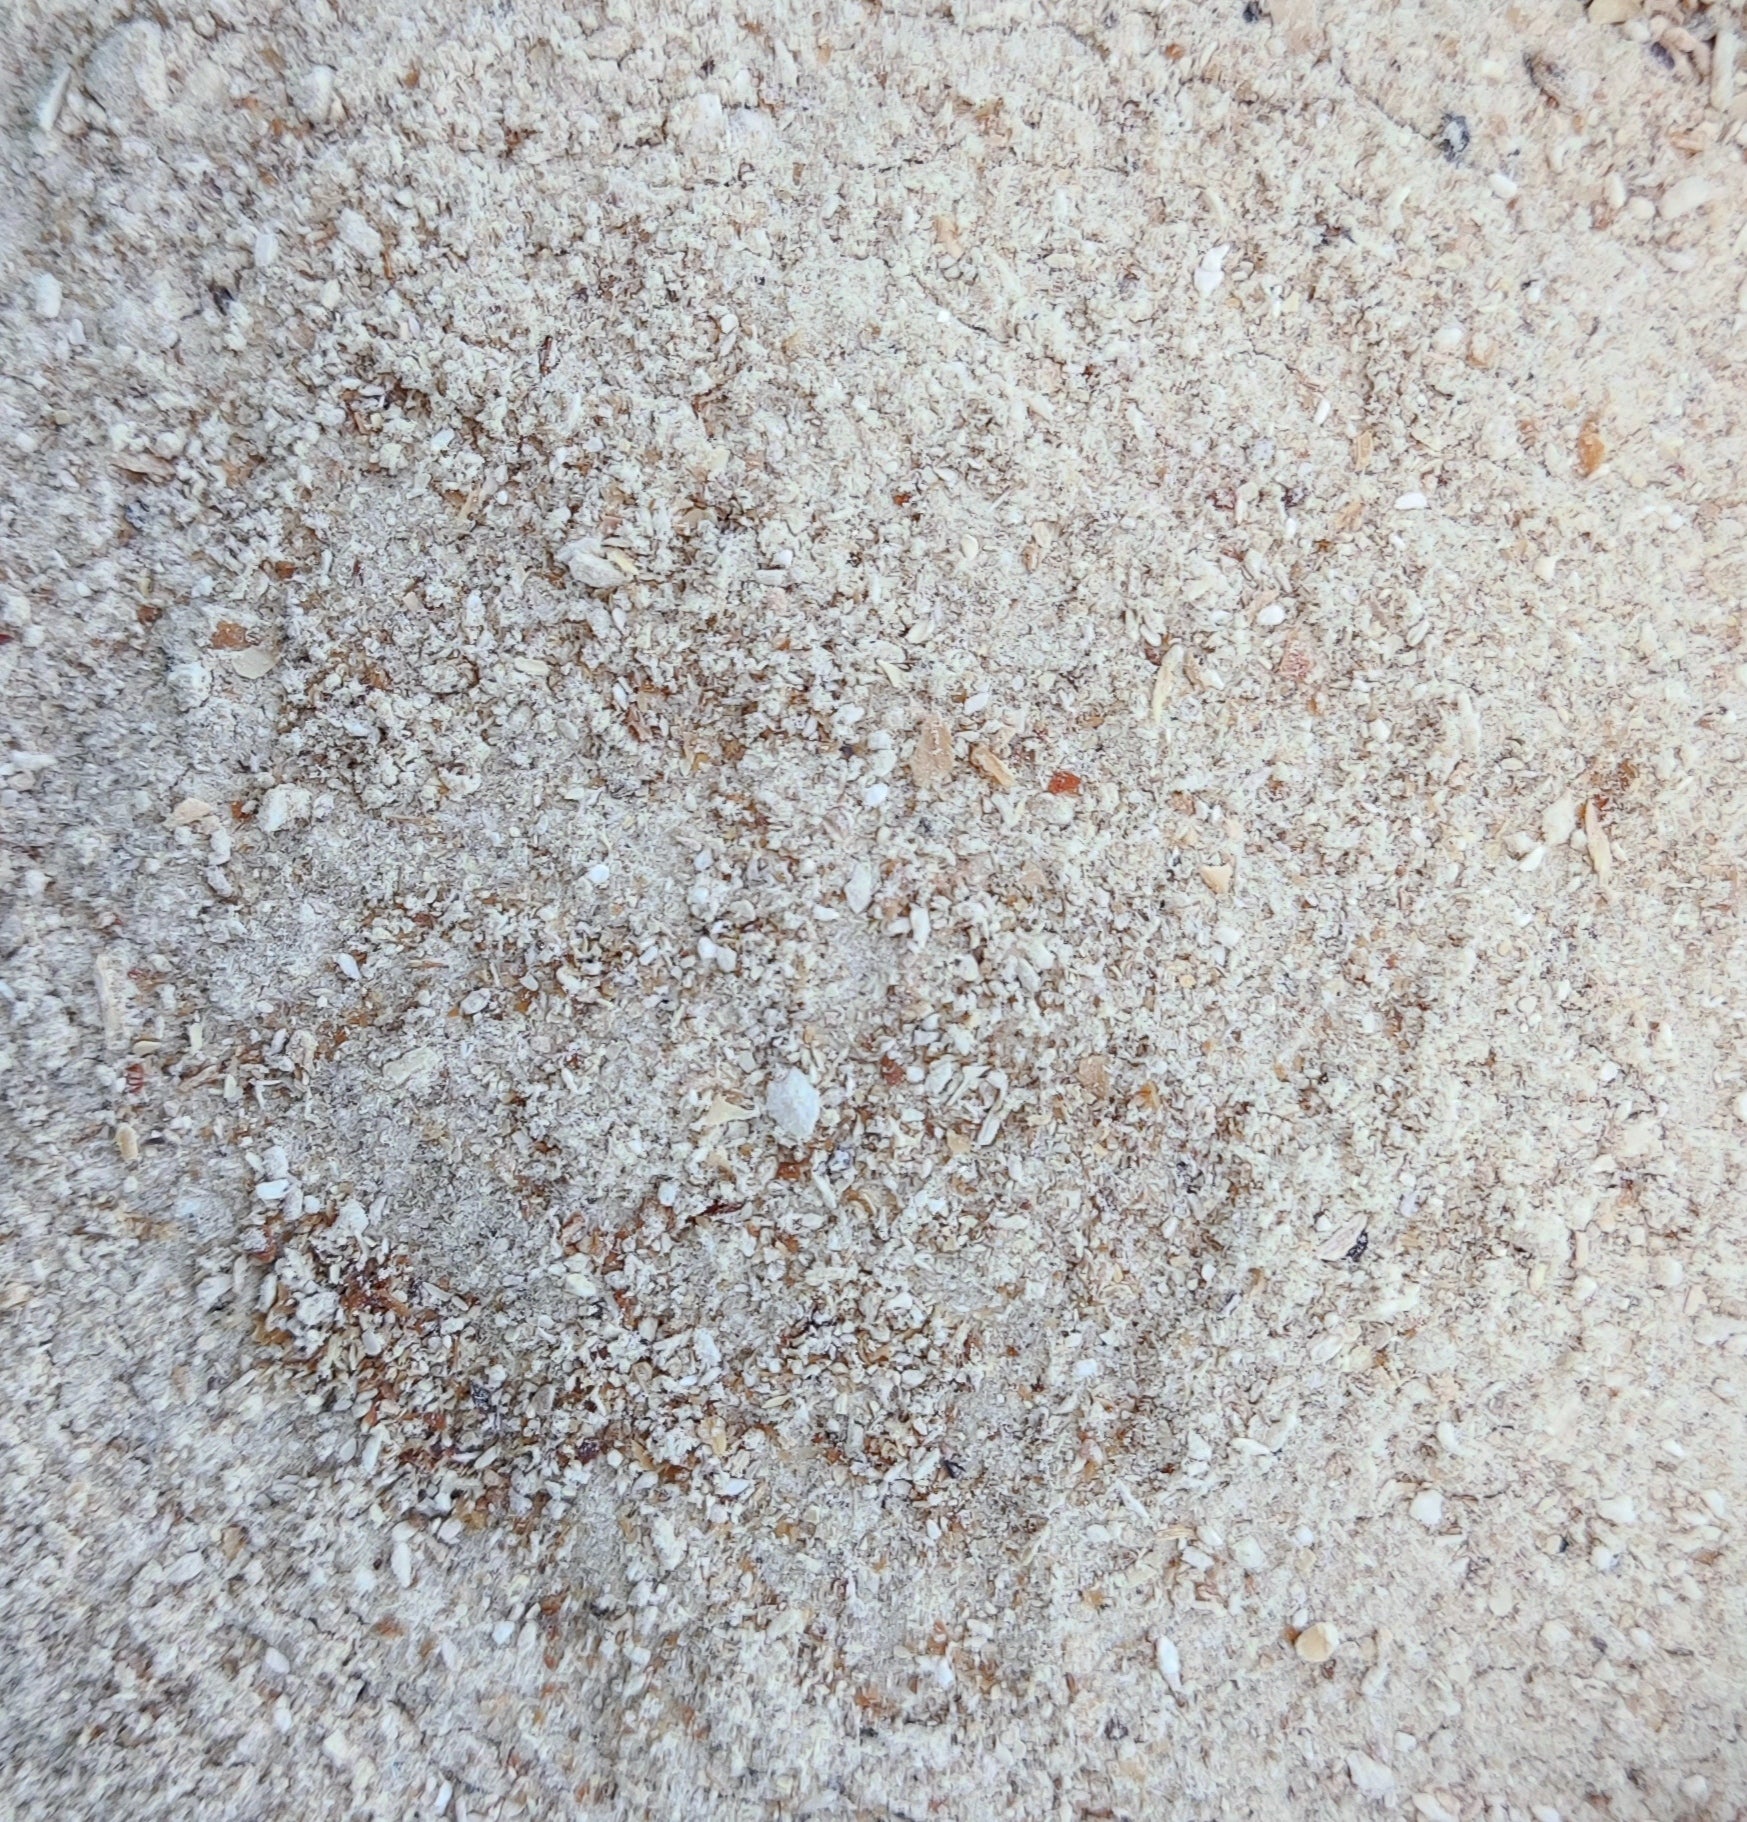 Oyster Mushroom Powder (Pleurotus Ostreatus)